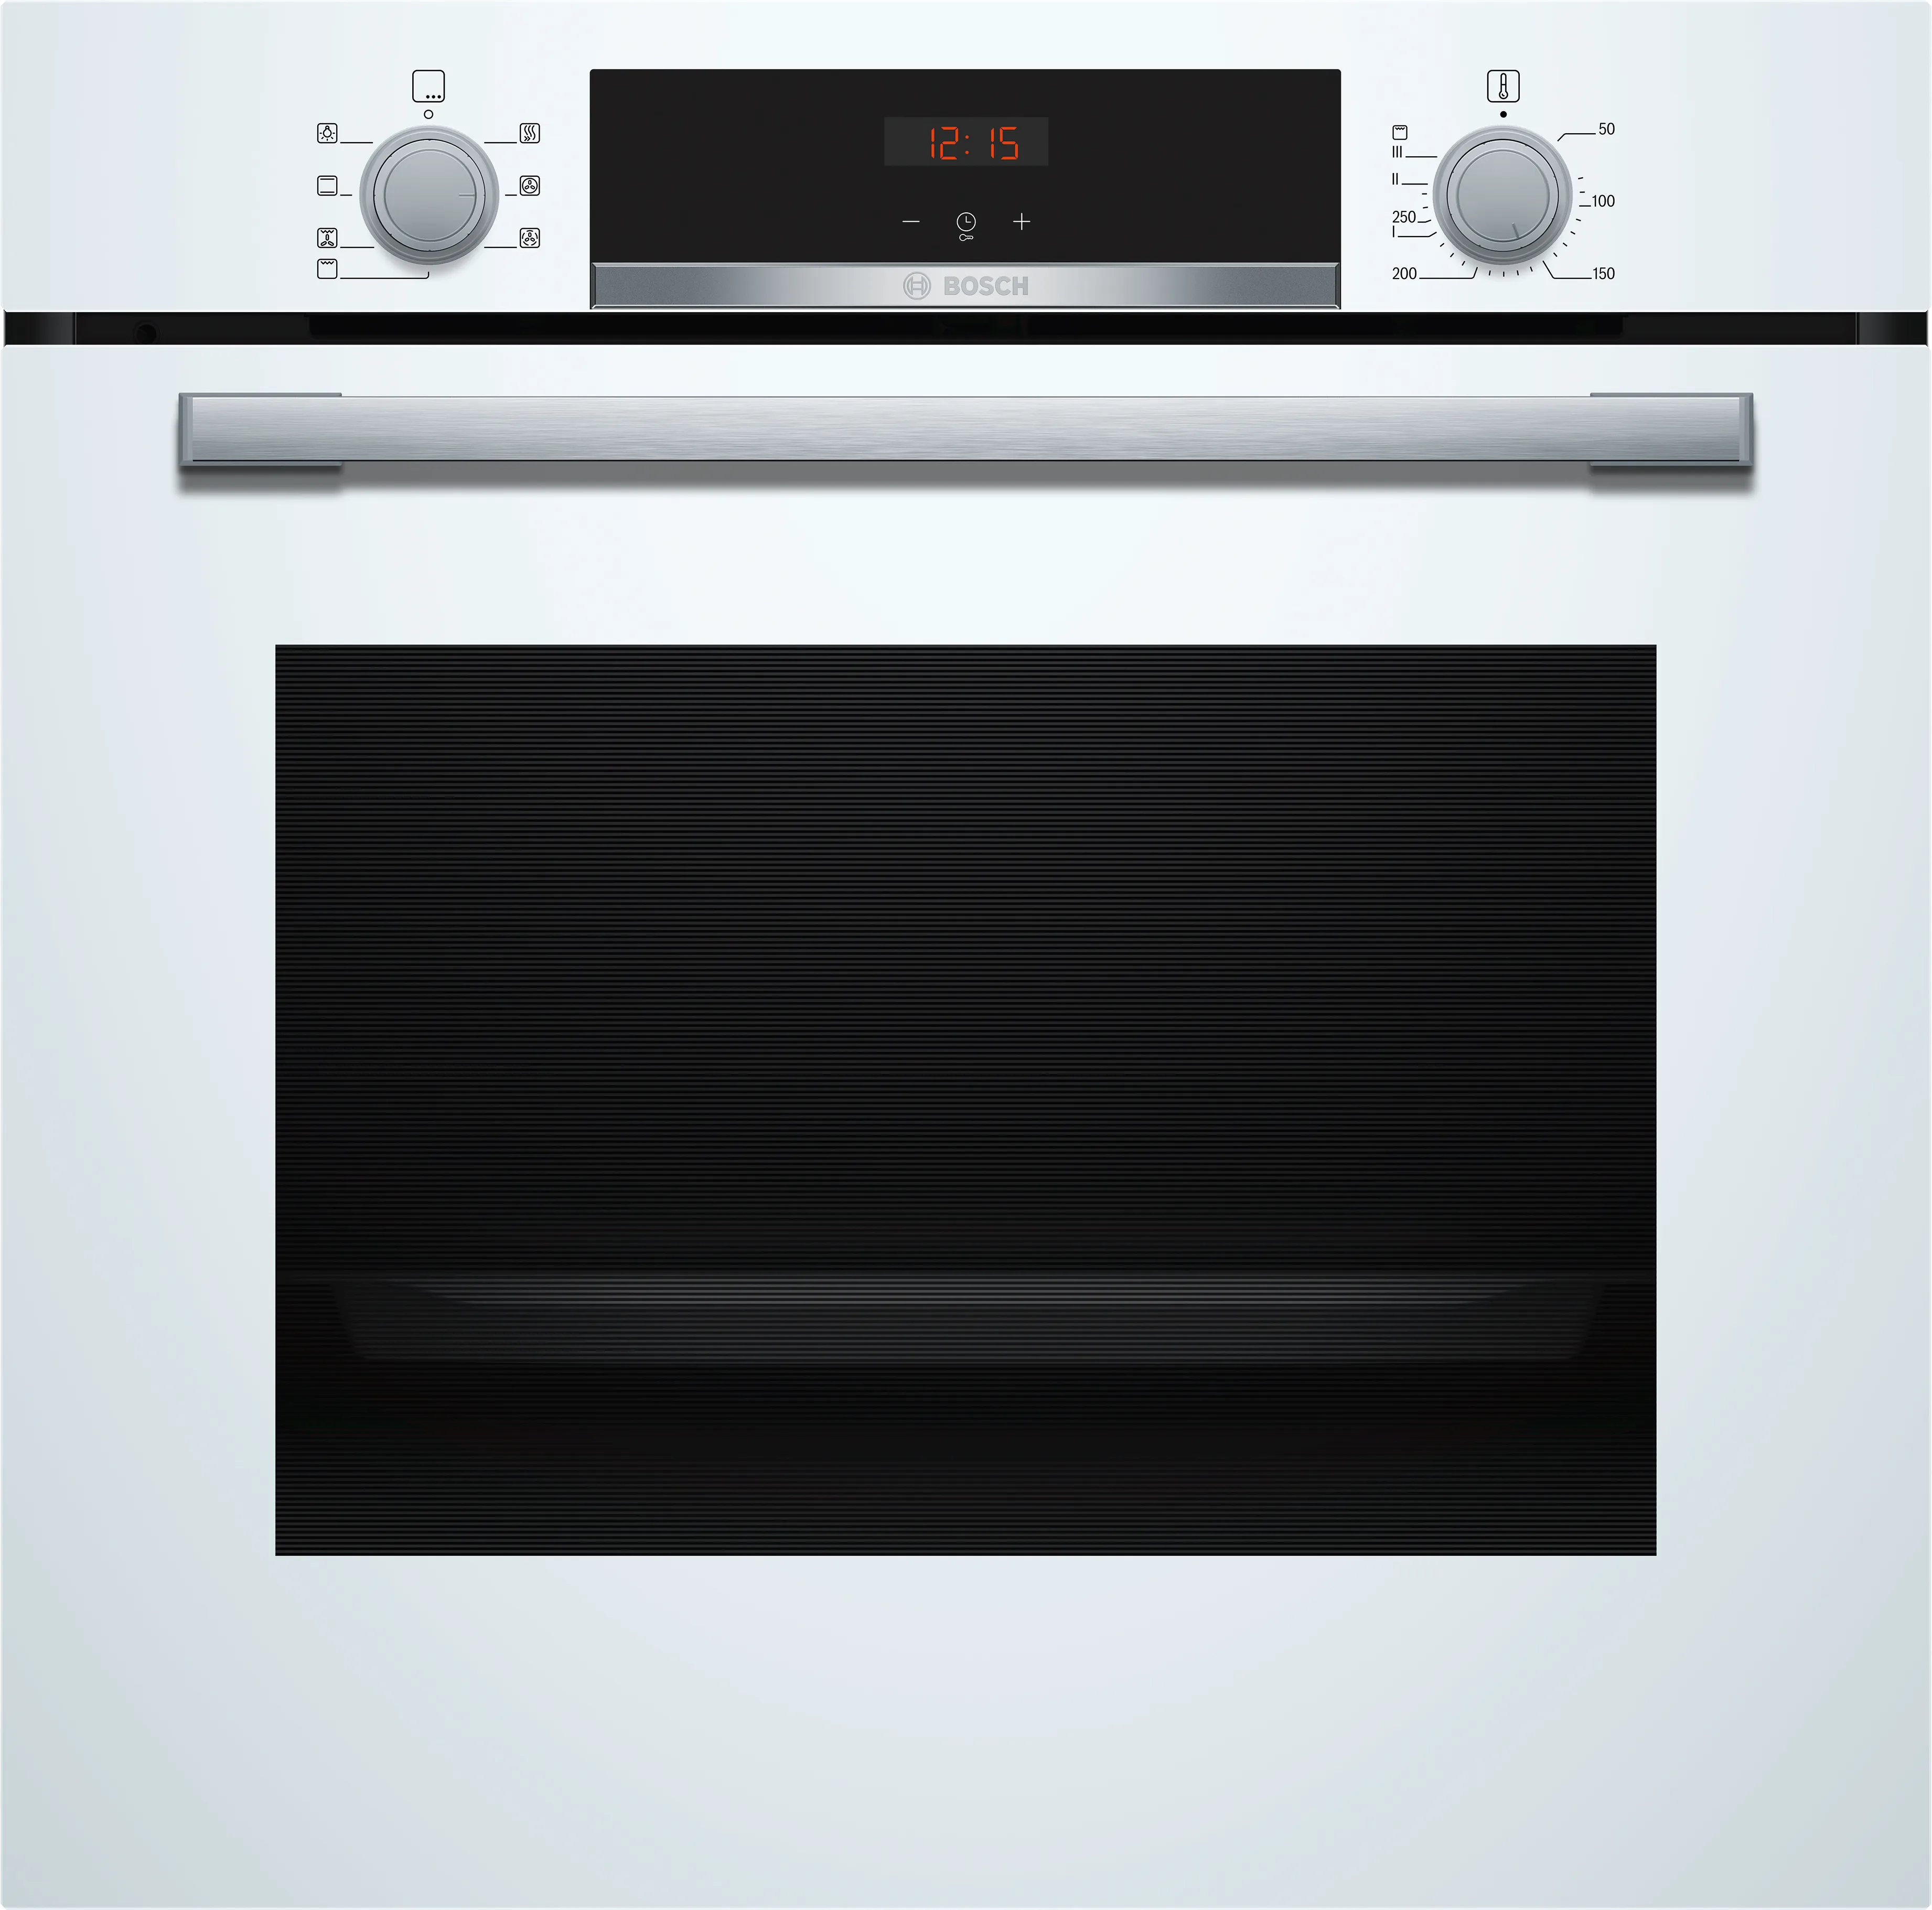 Série 4 built-in oven 60 x 60 cm Blanc 